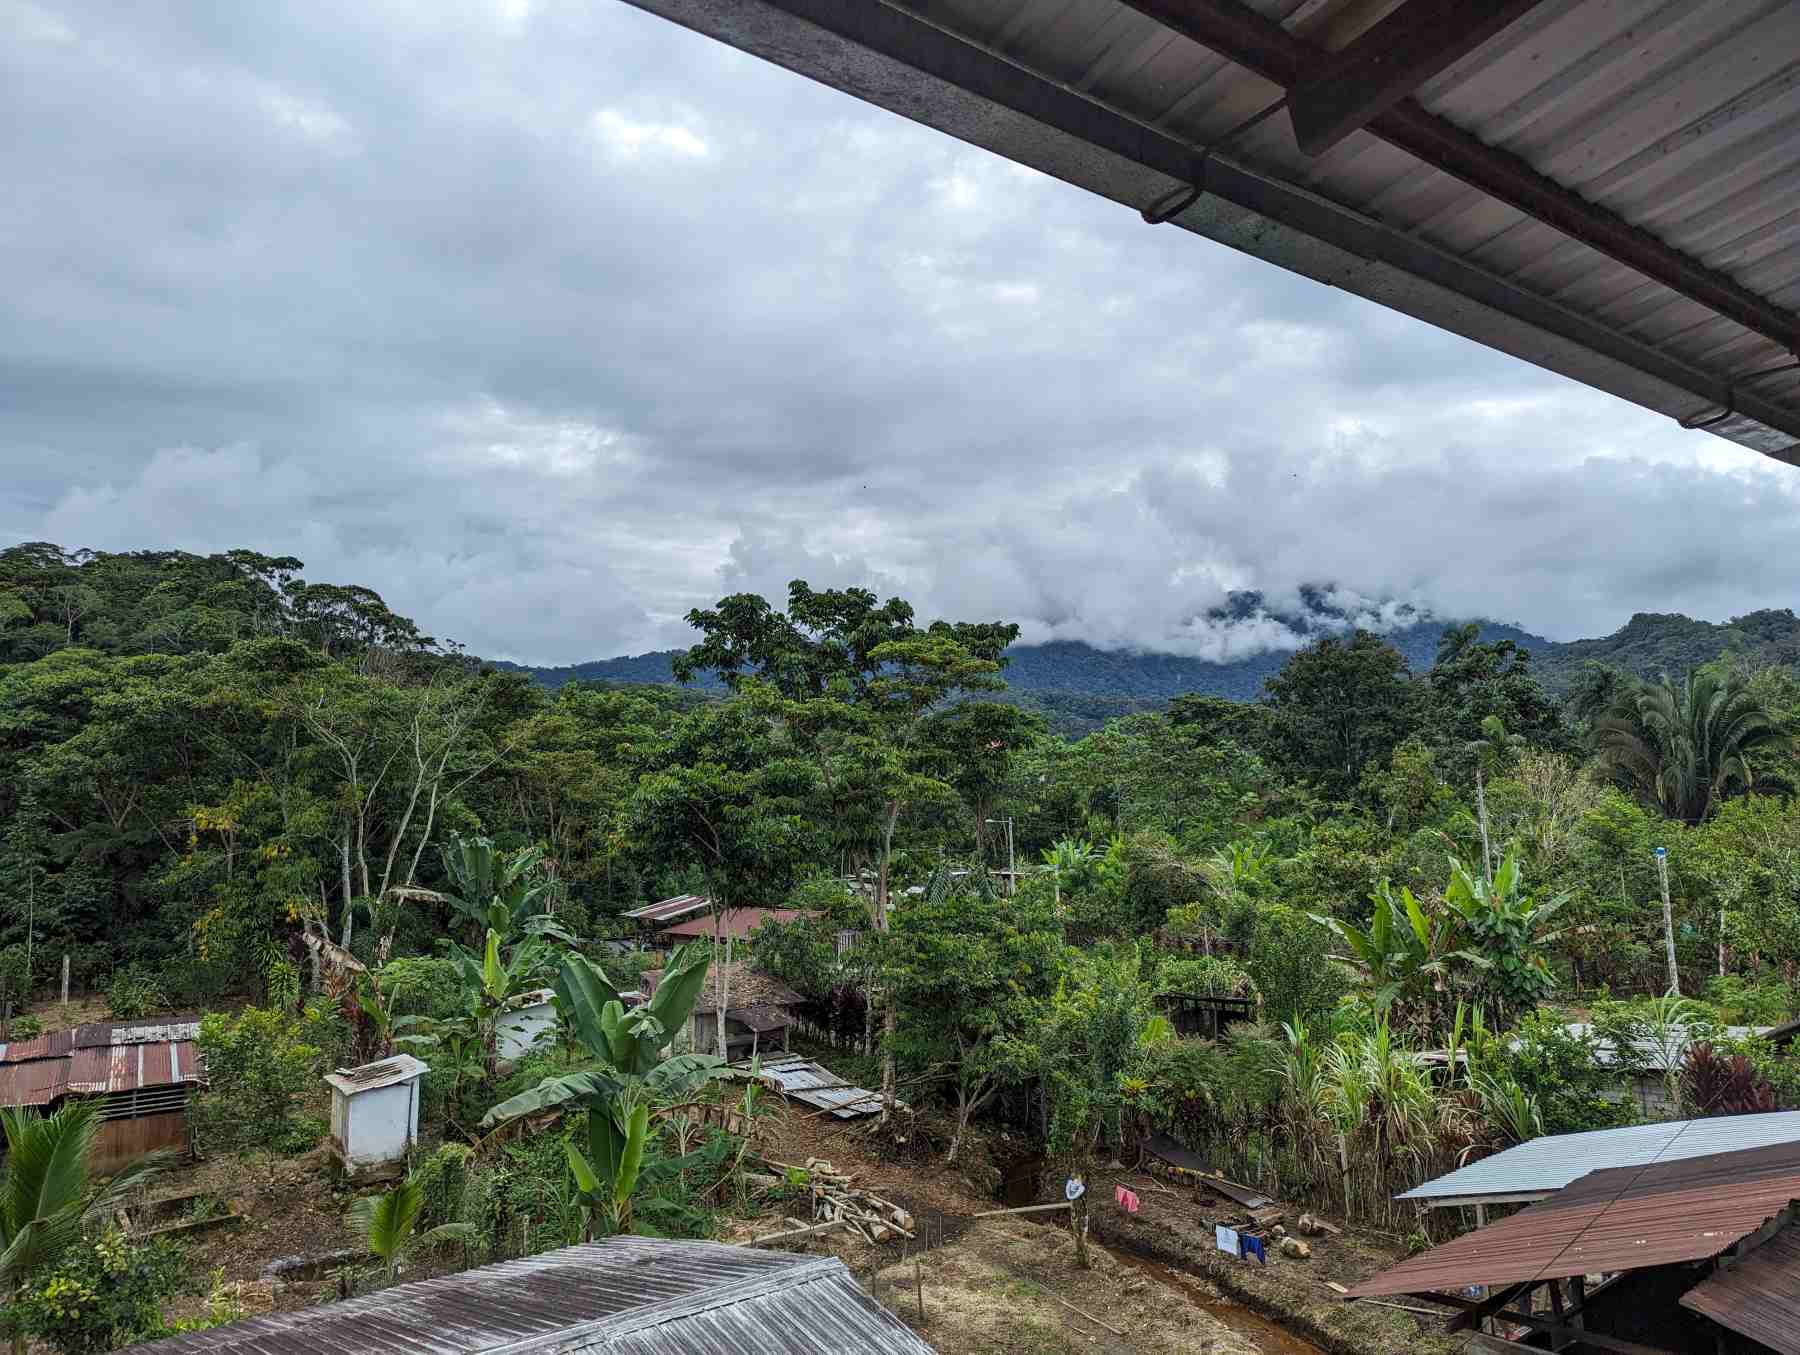 A vista of the Amazon rainforest